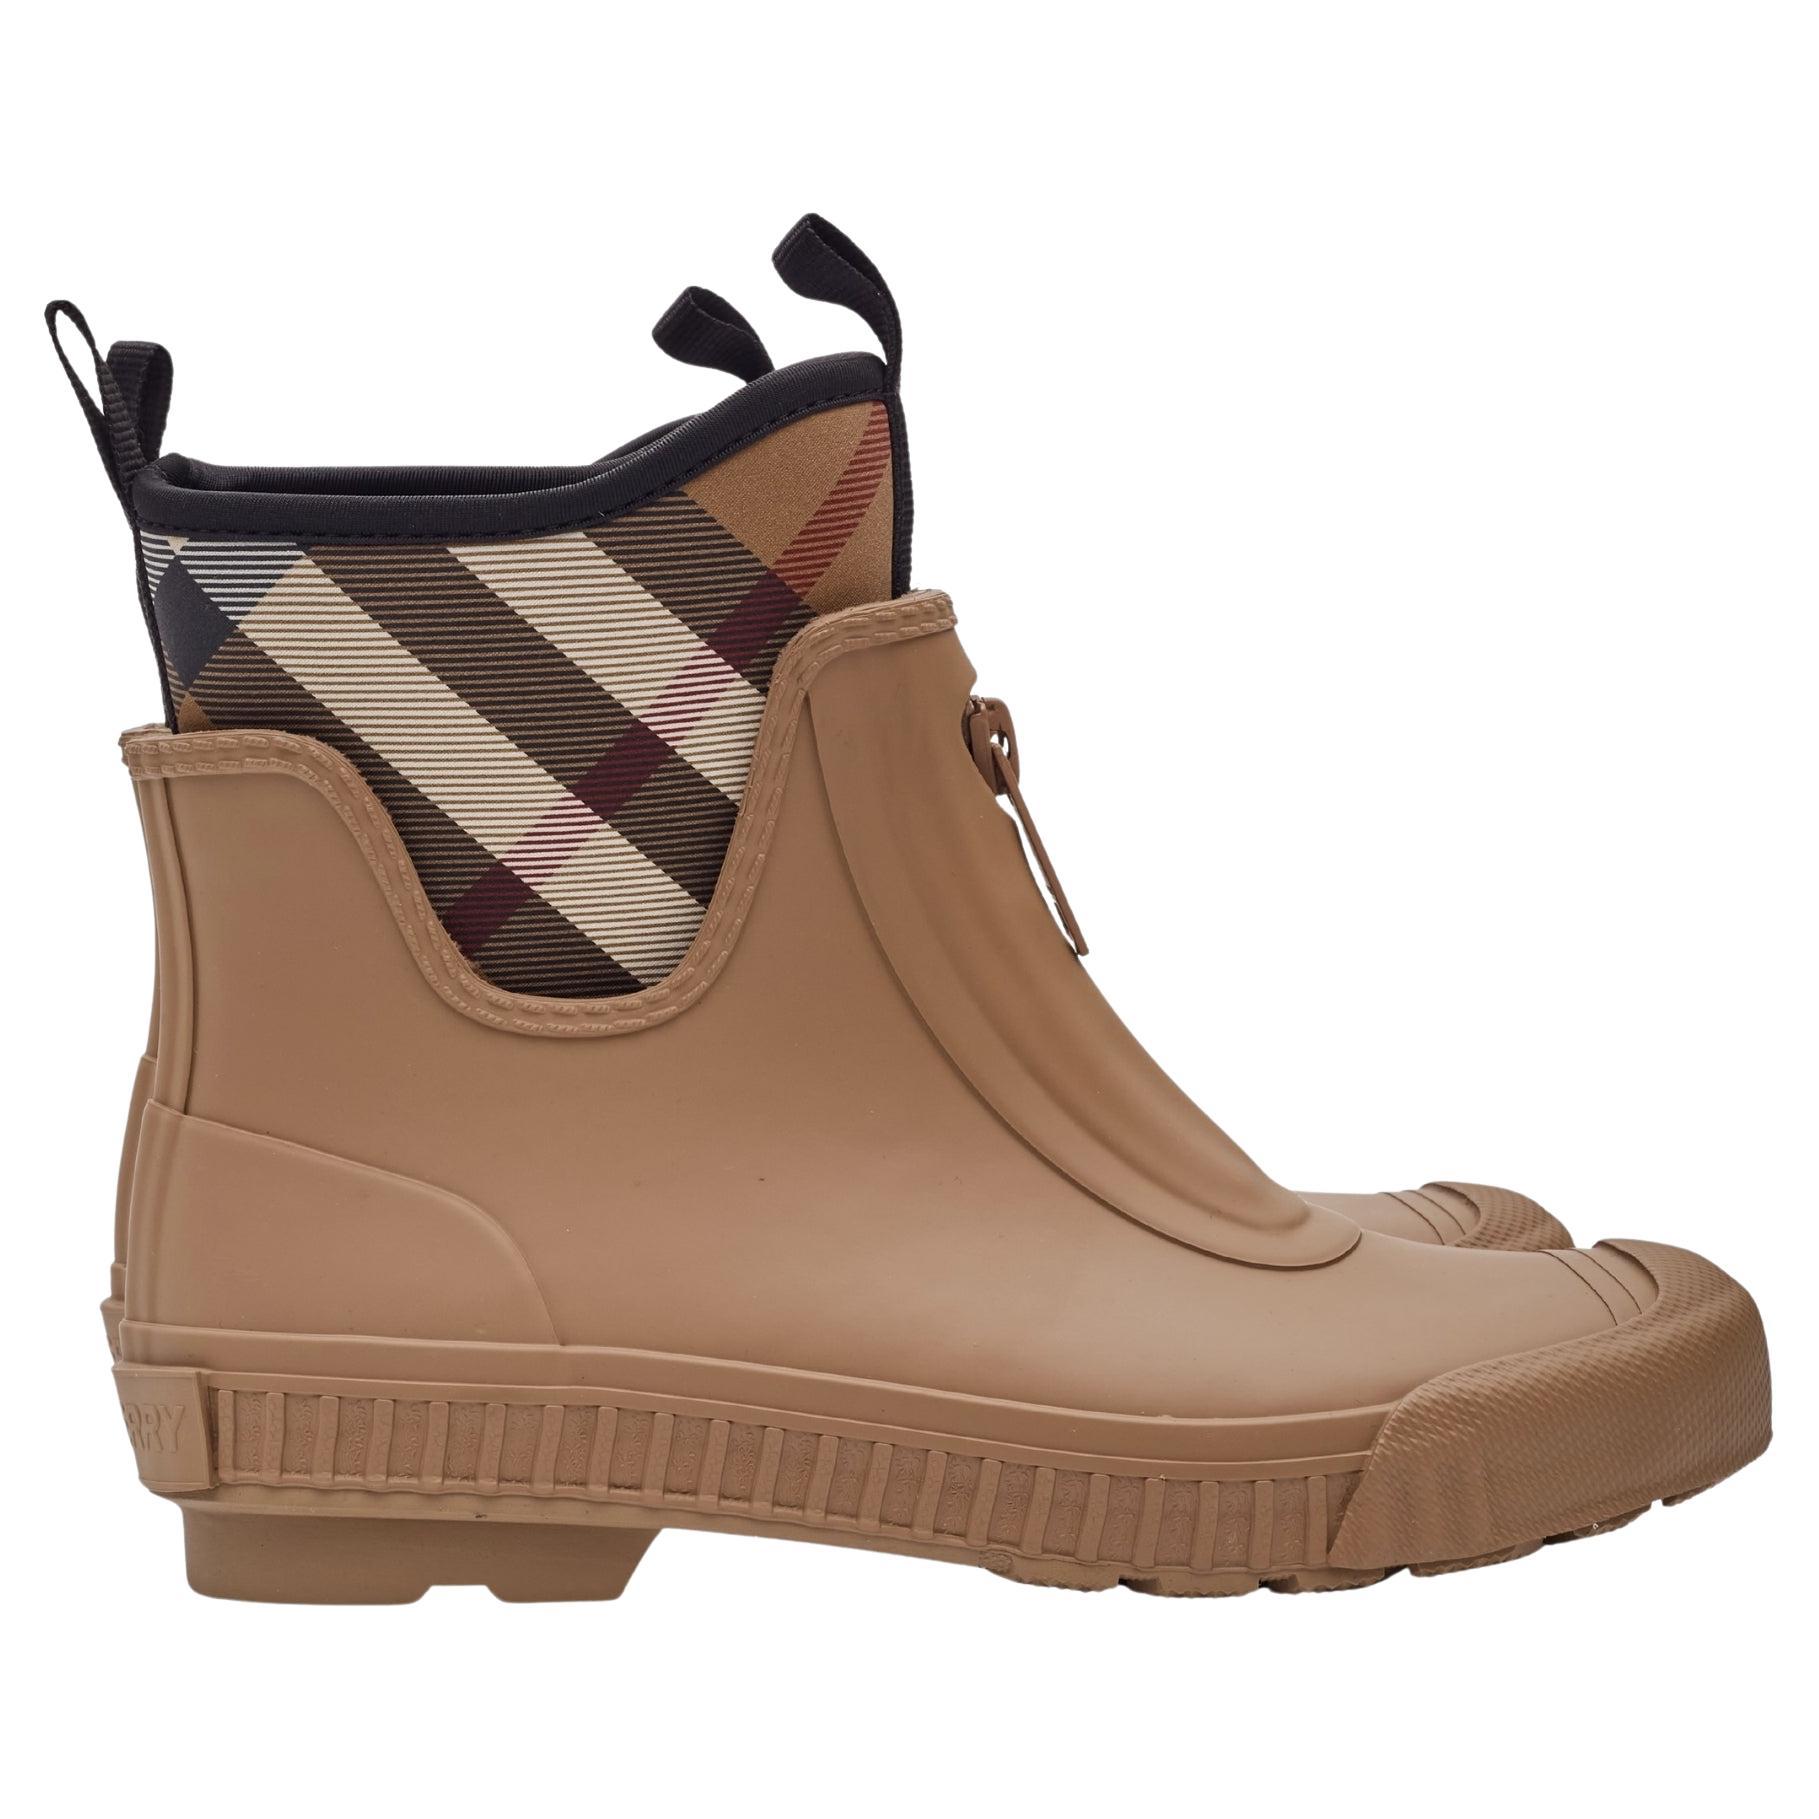 Burberry Rubber & Neoprene Check Brown Rain Boots (38 EU)